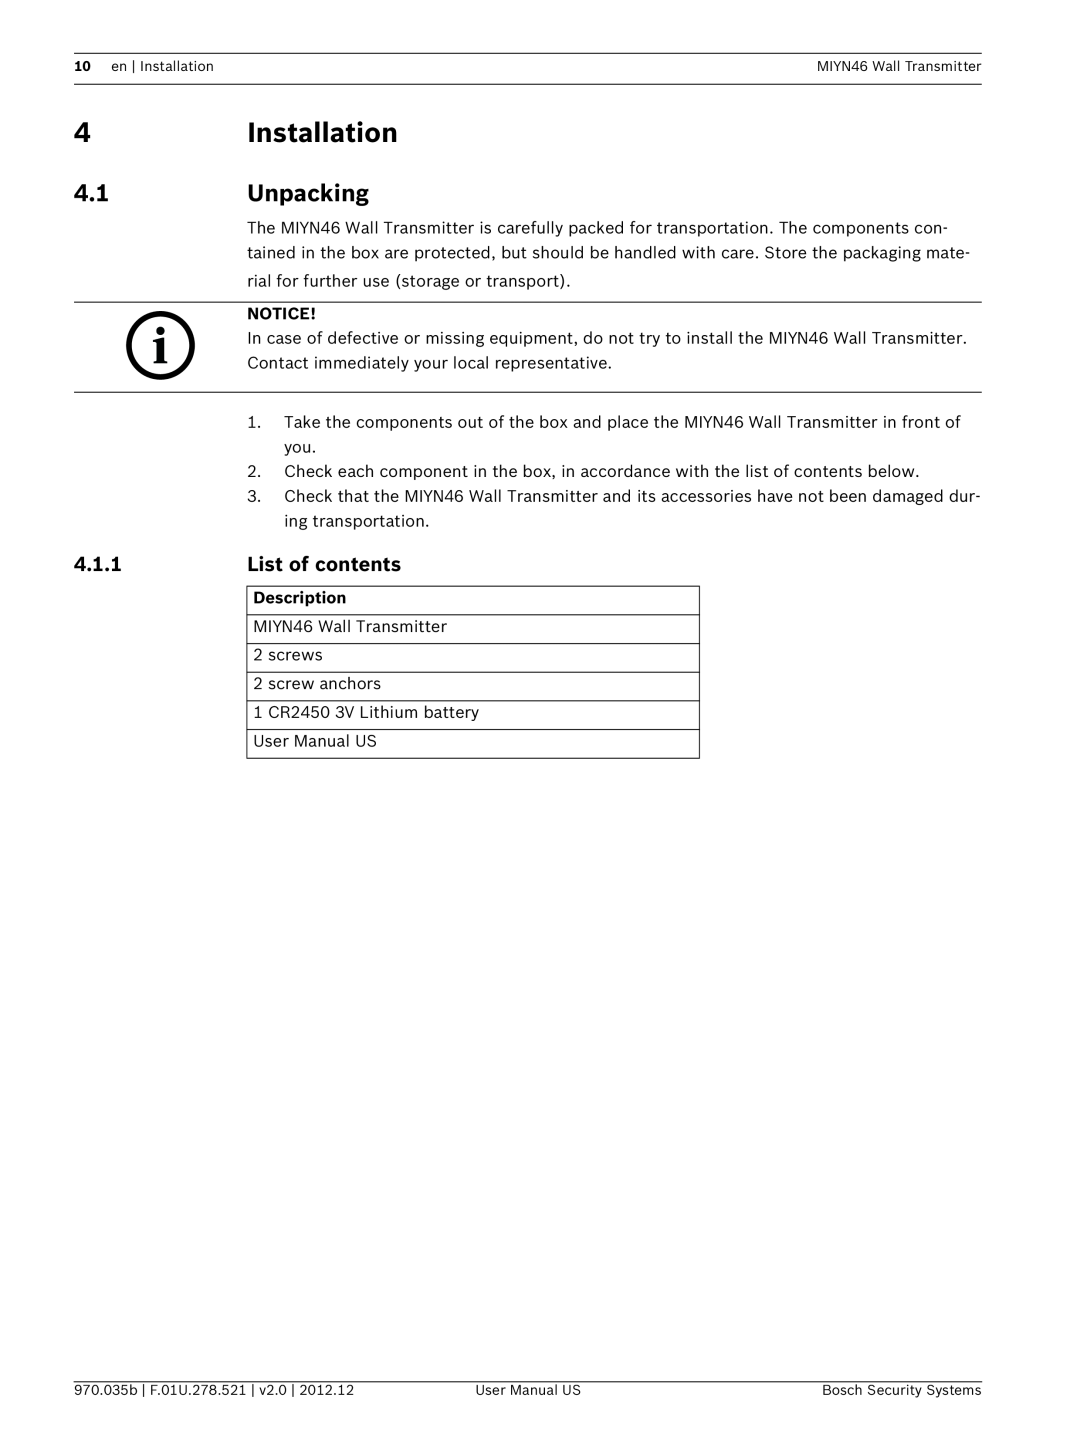 Bosch Appliances MIYN46 user manual Installation, Unpacking, 4.1.1, List of contents 